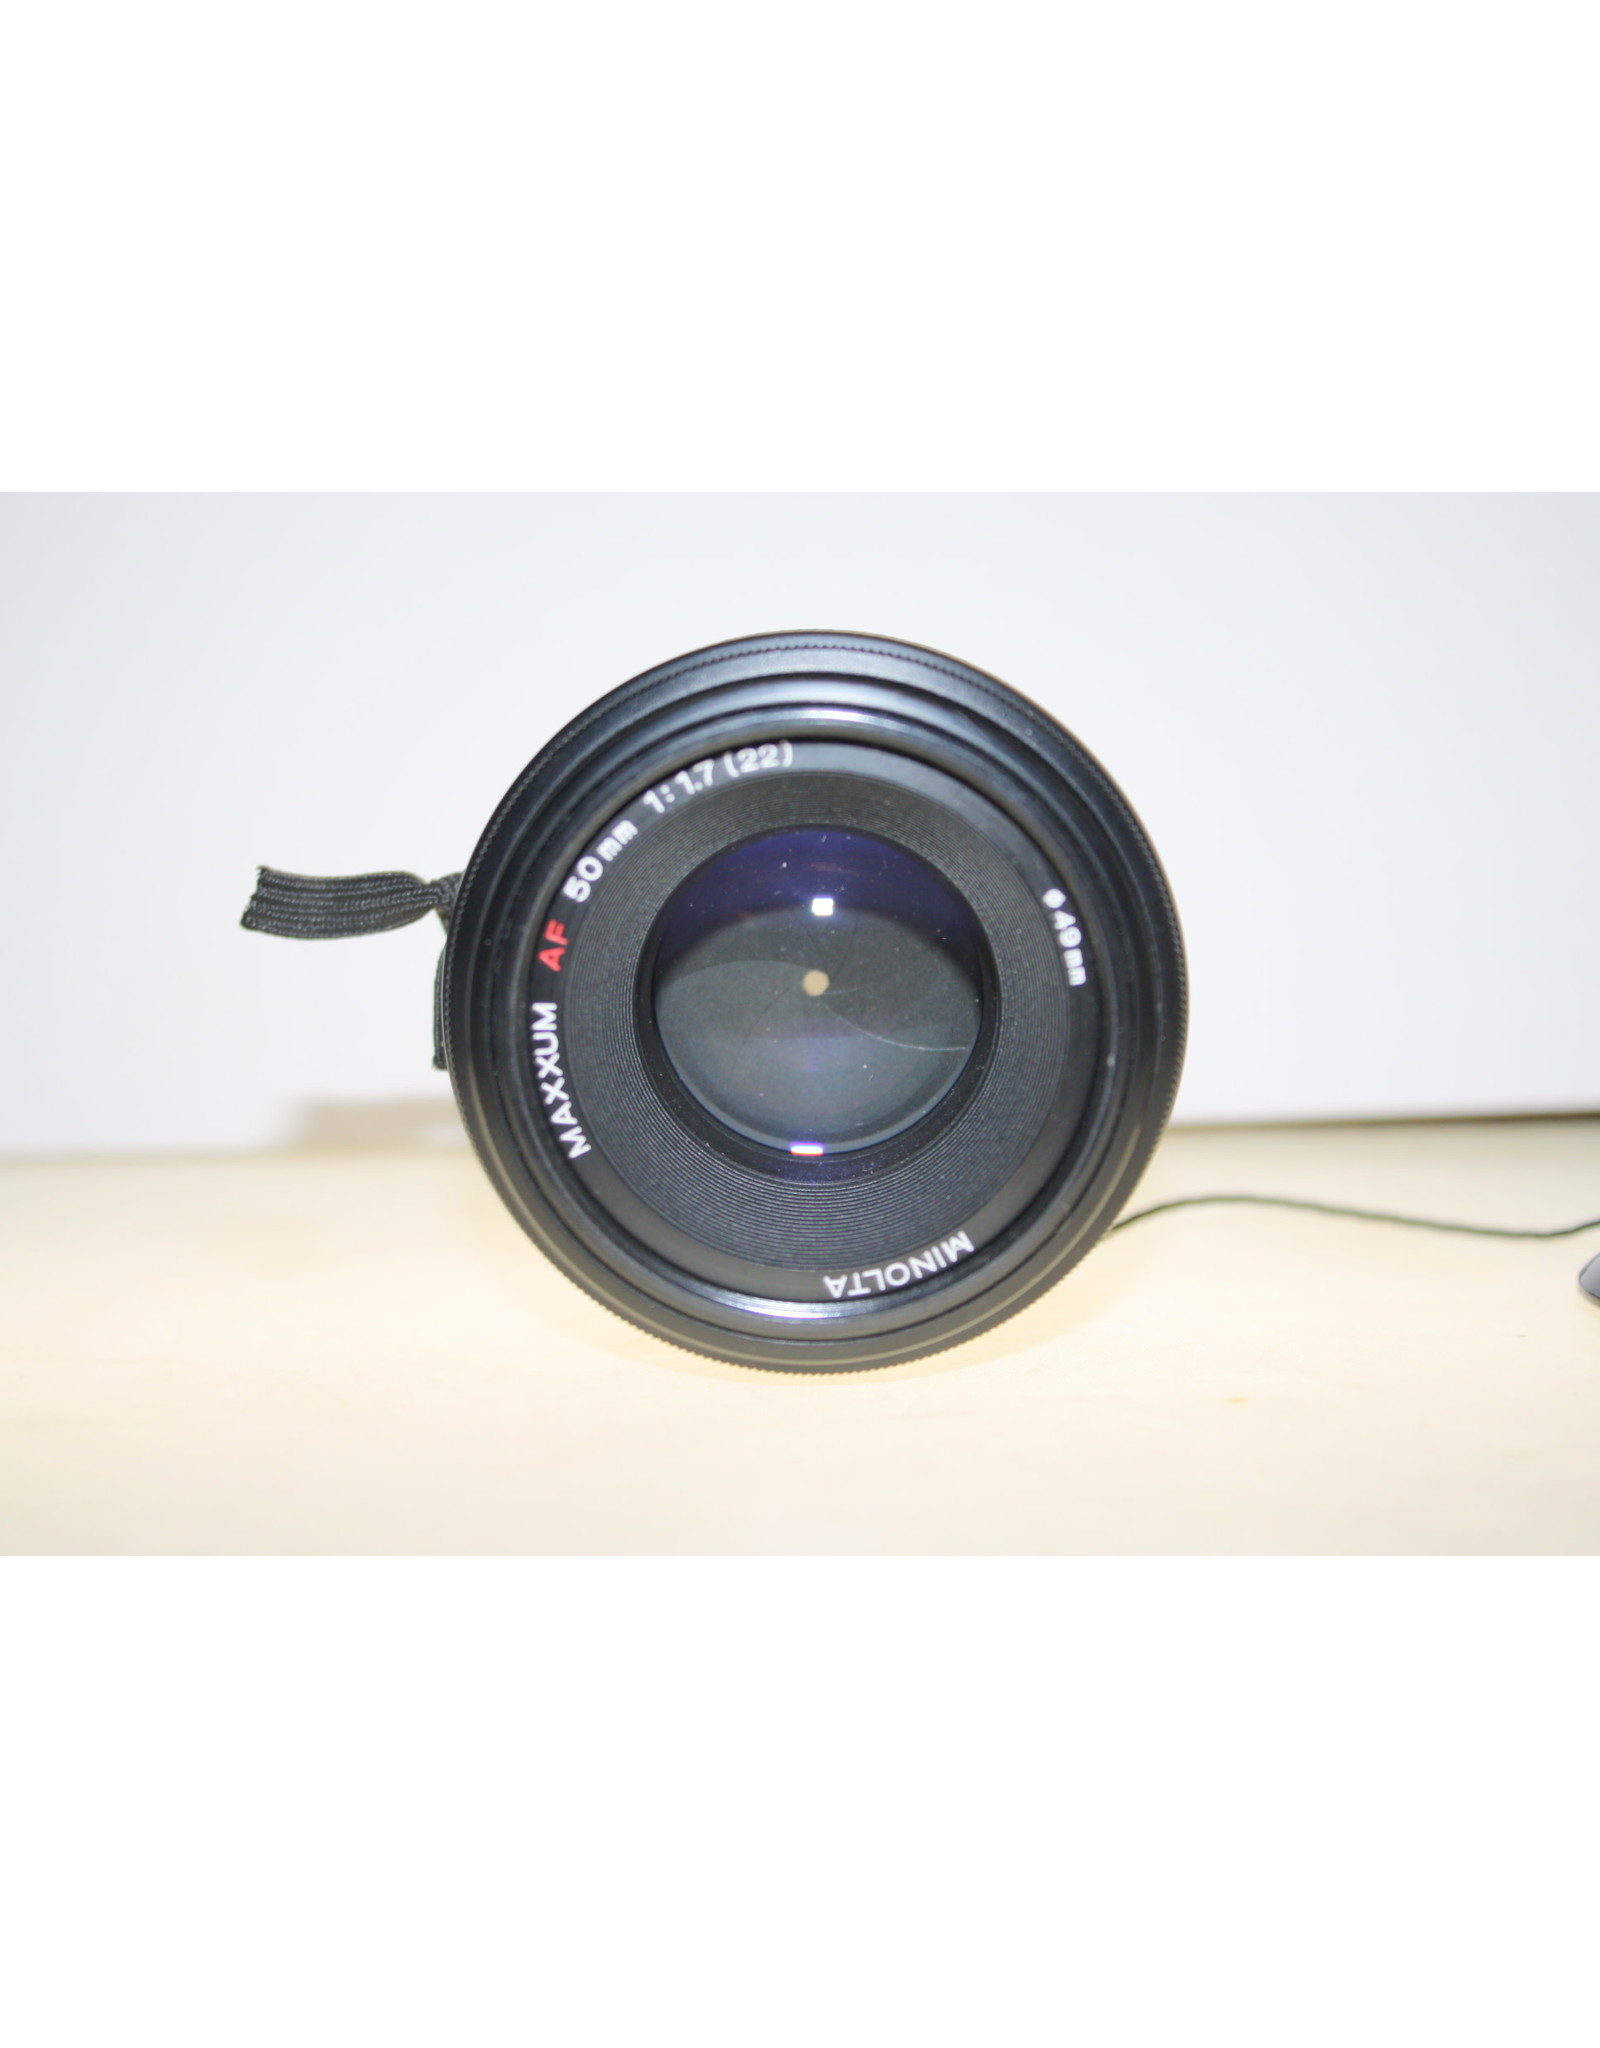 Konica Minolta Minolta Maxxum 50mm 1.7 Lens (Pre-owned)